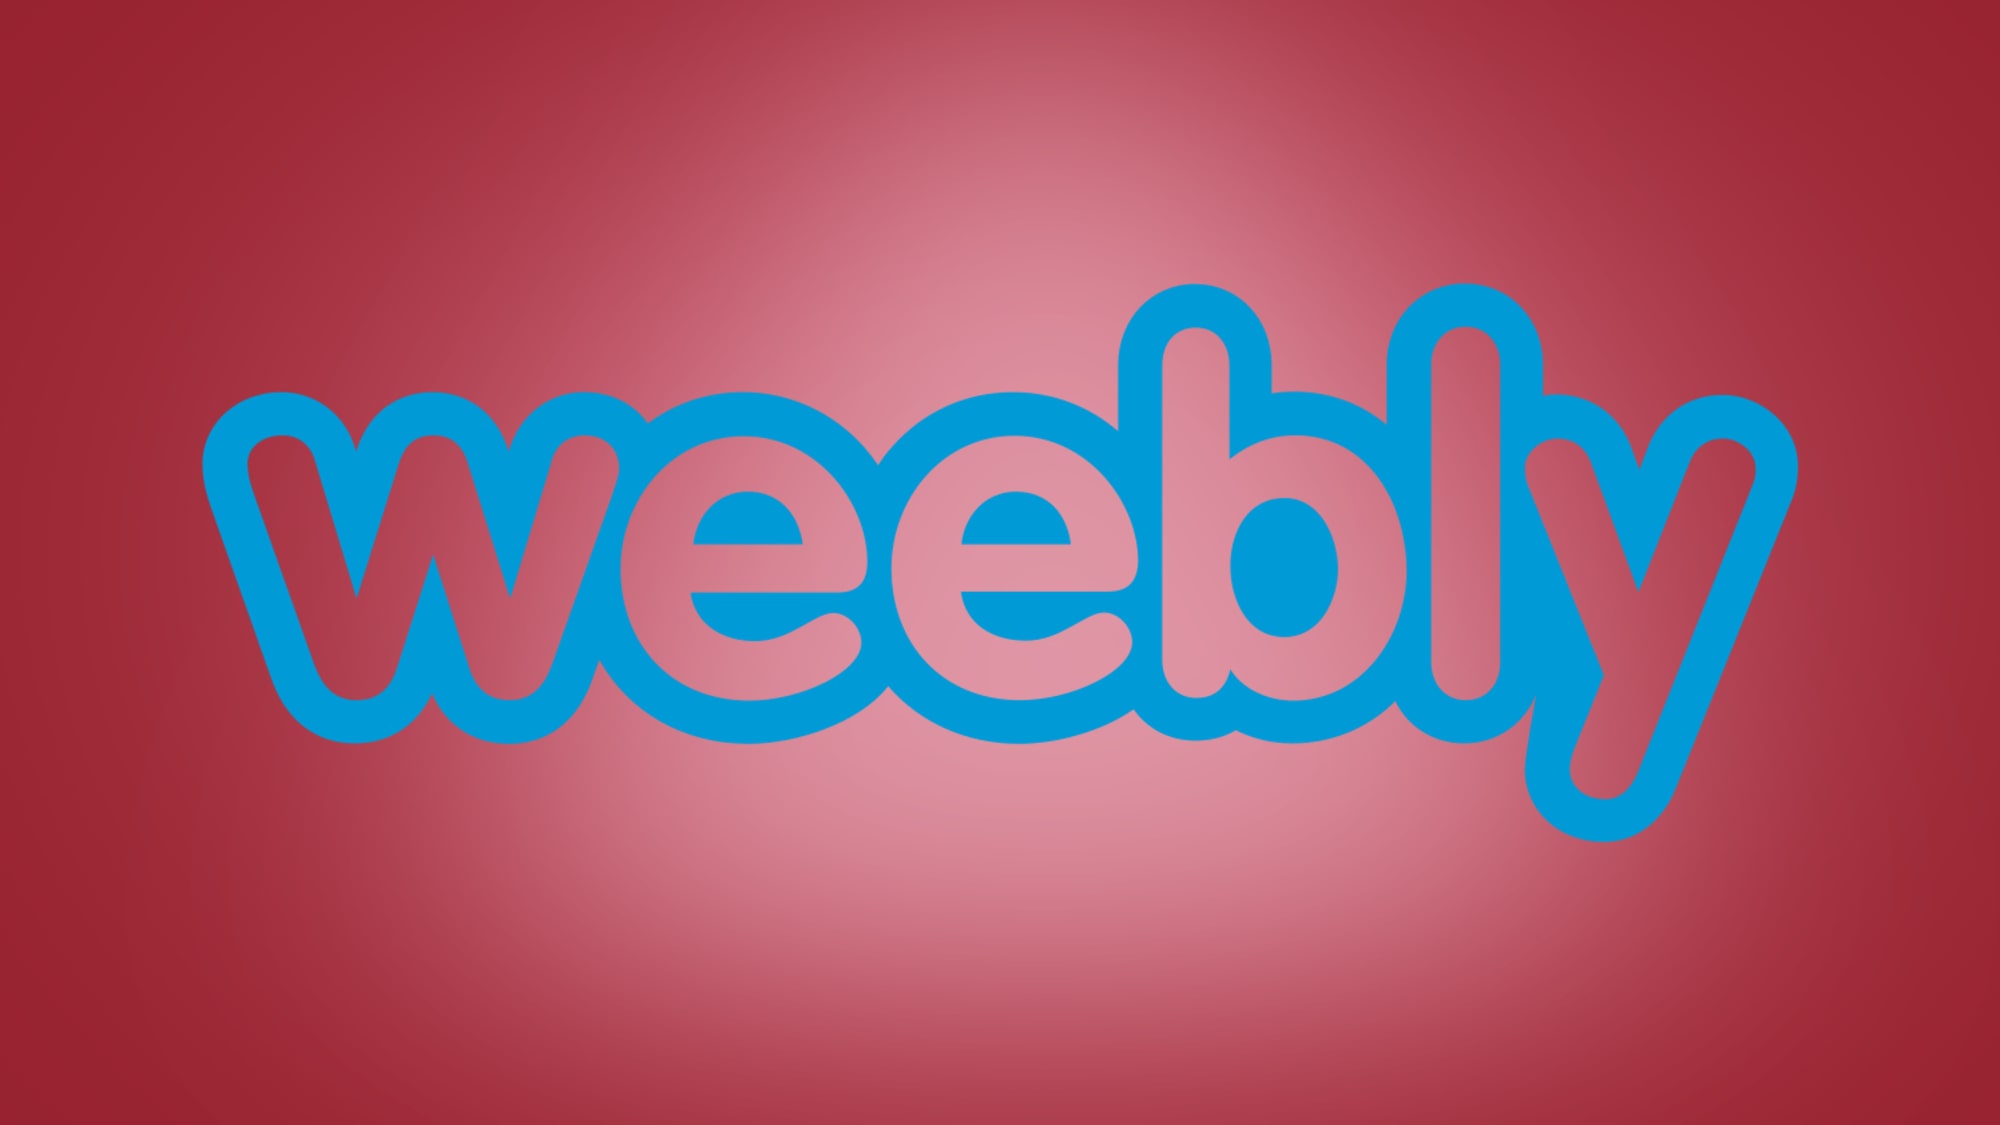 Weebly logo blue on burgundy background